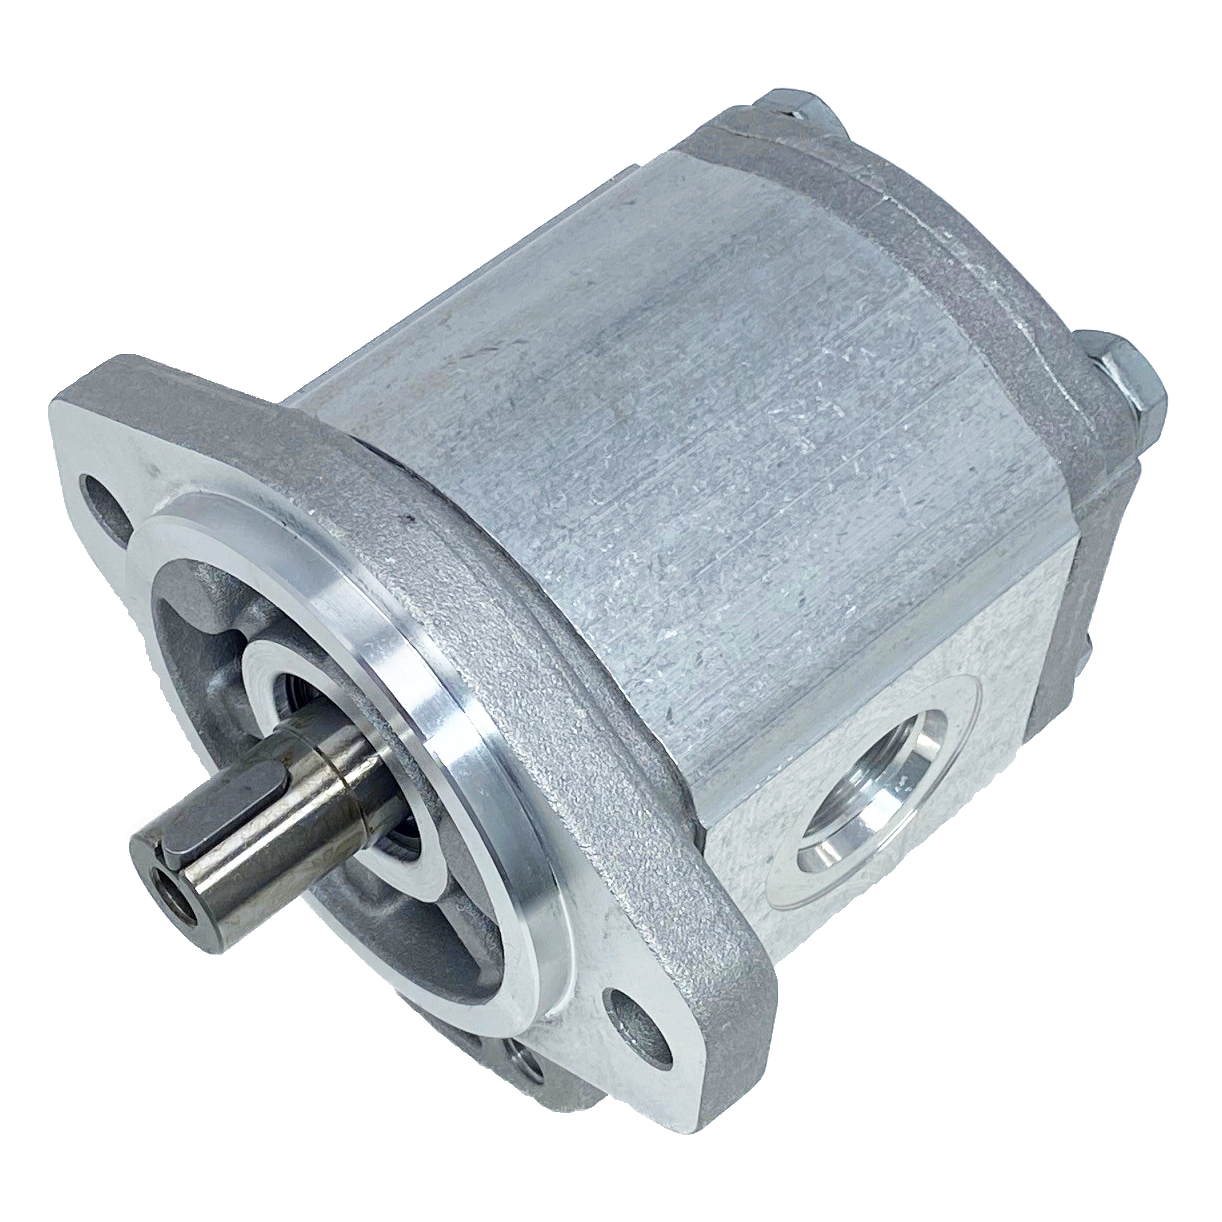 PLM20.20R0-50S1-LOC/OD-N-EL : Casappa Polaris Gear Motor, 21.14cc, 2900psi Rated, 3000RPM, Reversible Rear External Drain, 3/4" Bore x 3/16" Key Shaft, SAE A 2-Bolt Flange, 0.625 (5/8") #10 SAE Inlet, 0.75 (3/4") #12 SAE Outlet, Aluminum Body & Flange